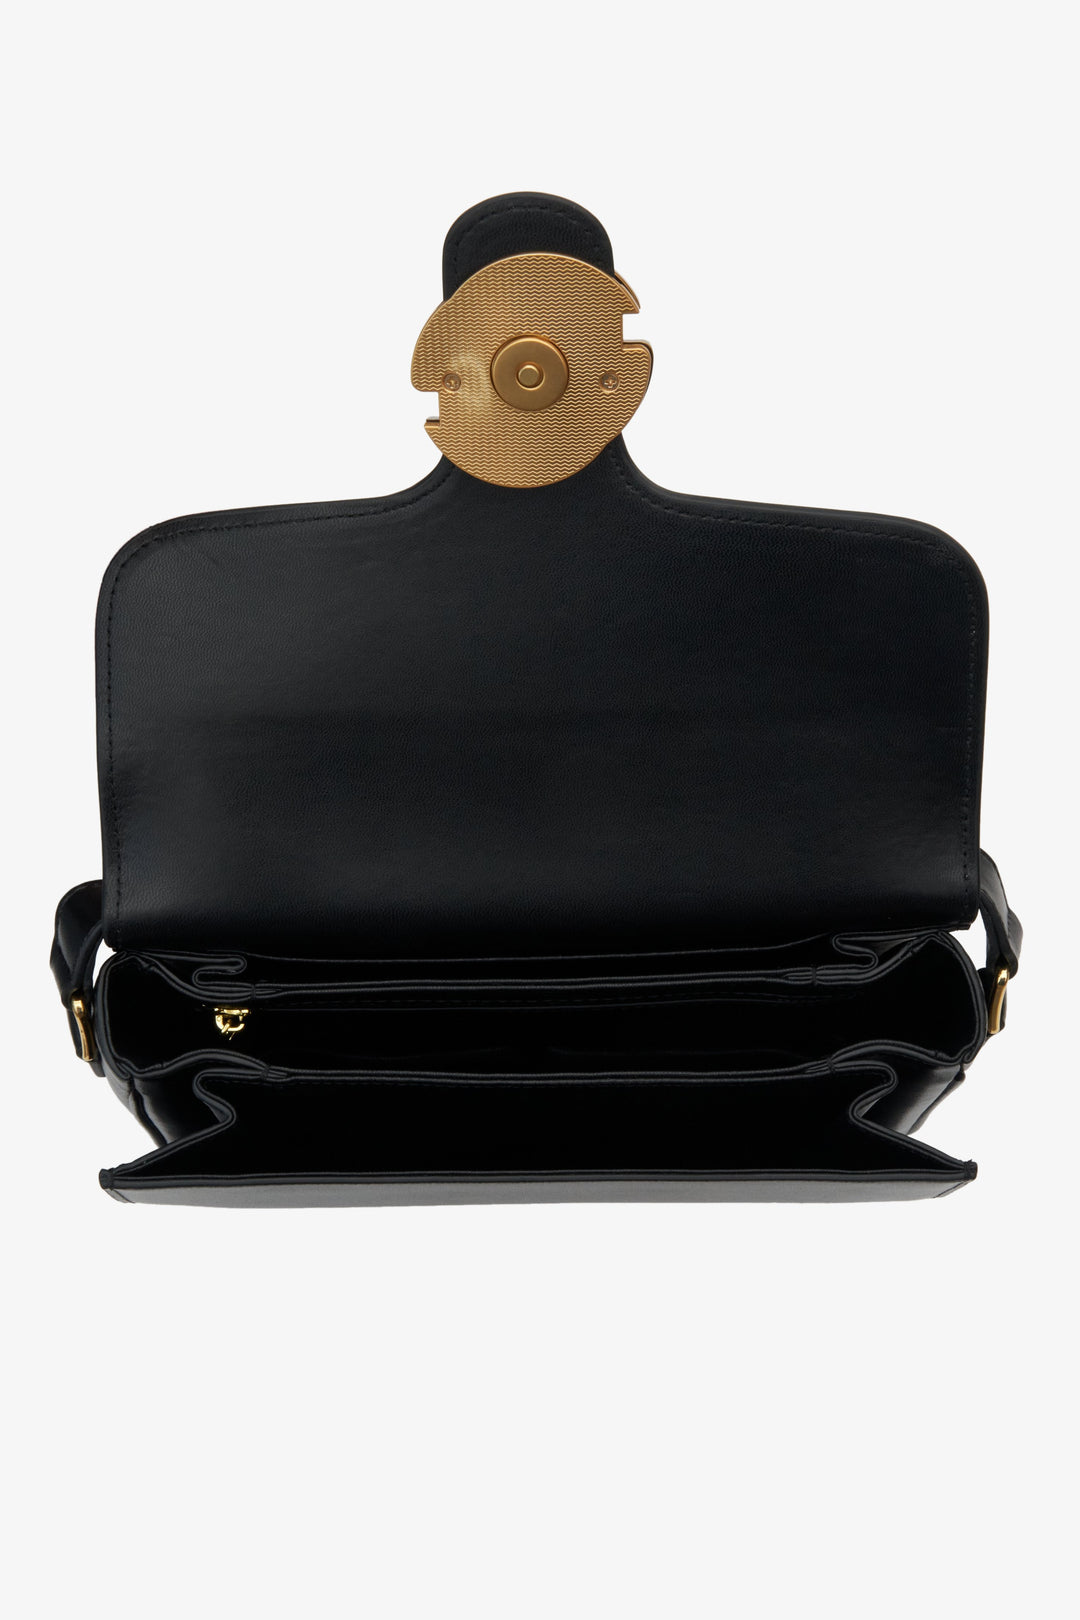 Women's black small handbag - inside of the bag.